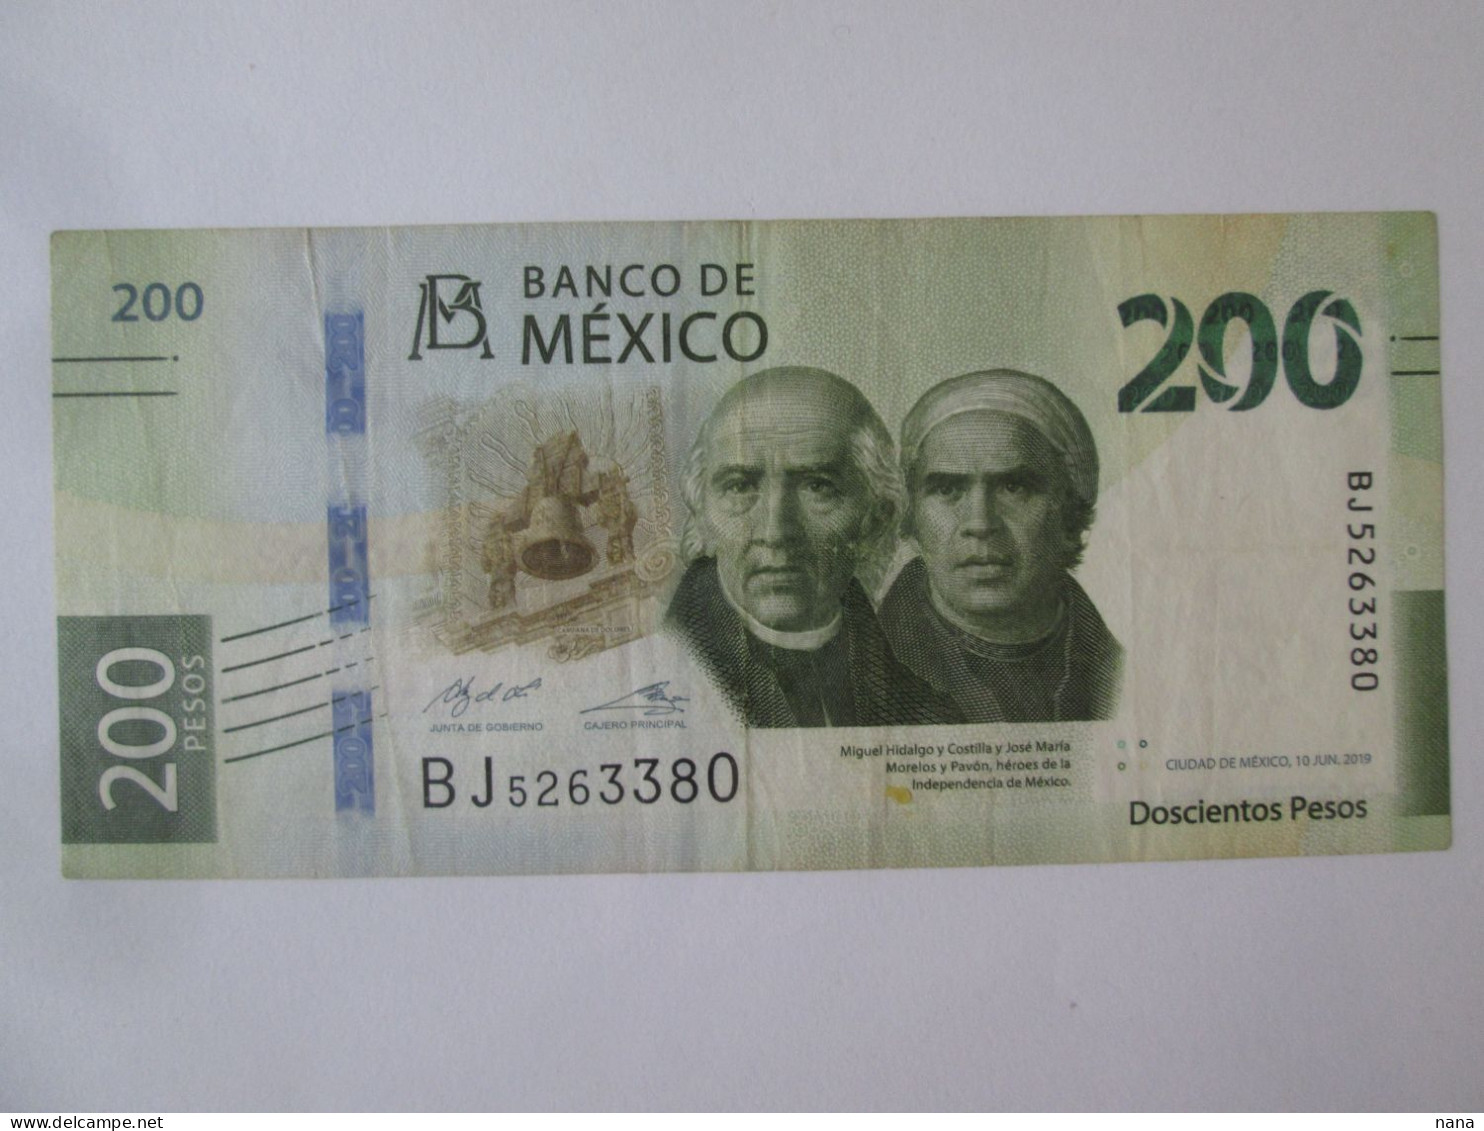 Mexico 200 Pesos 2019 Banknote See Pictures - México